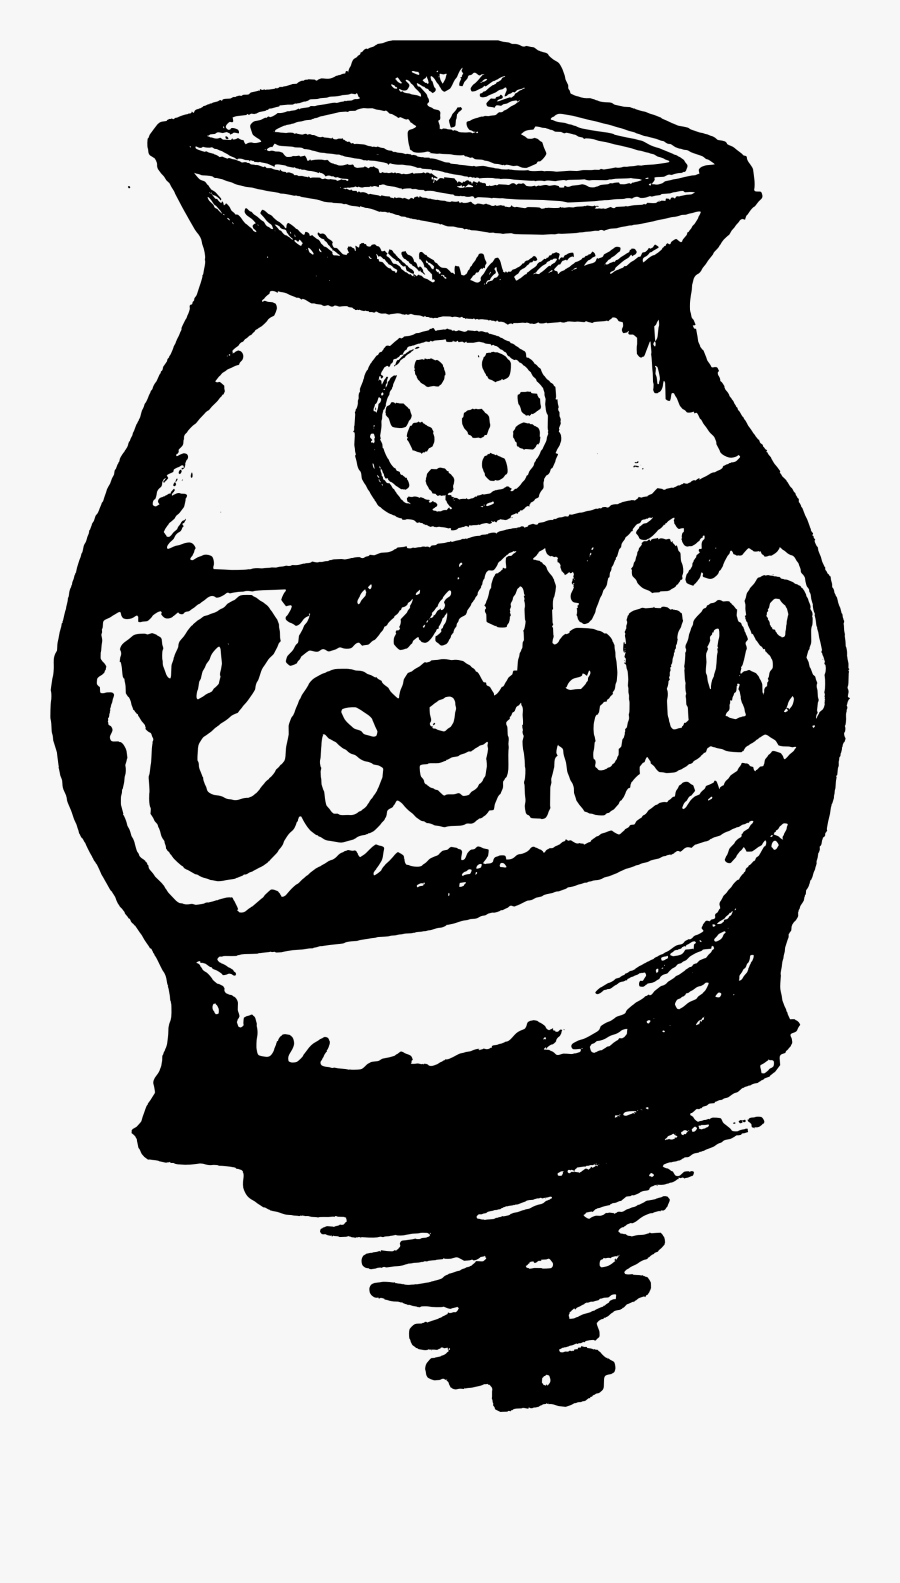 Drawn Cookie Sketch - Cookies Jar Drawing, Transparent Clipart